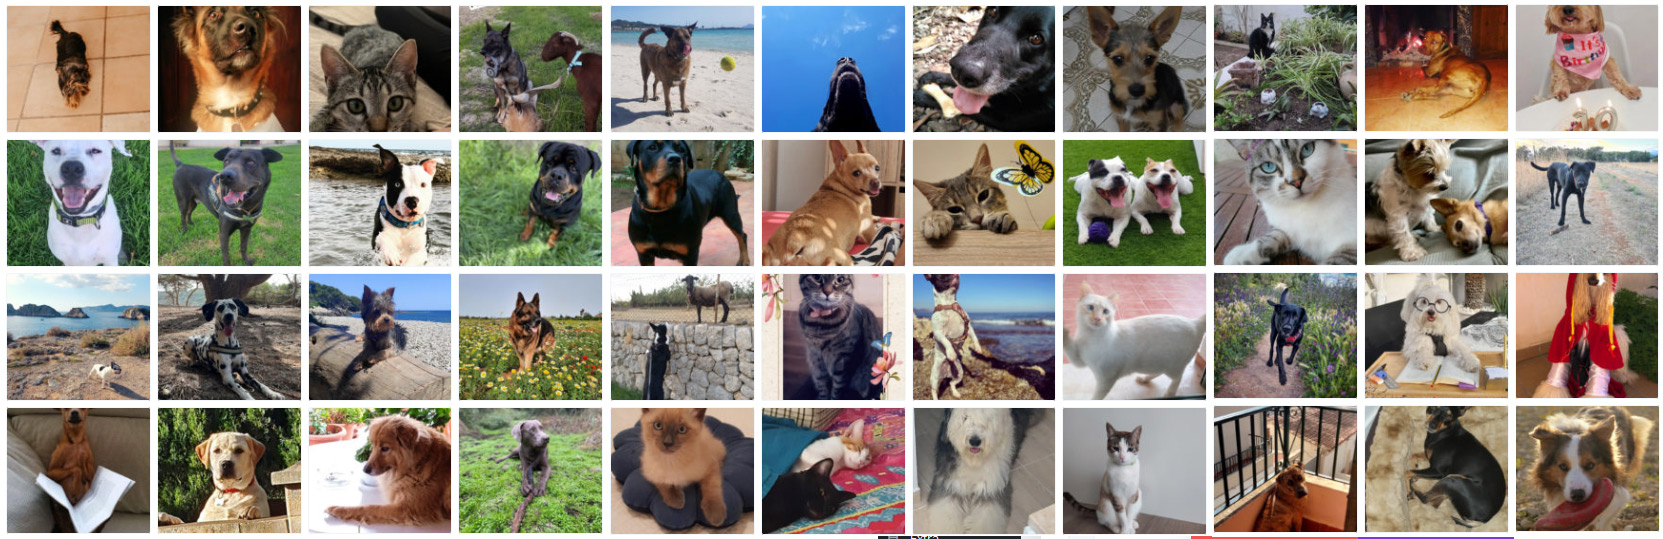 Participantes en el I Concurso Fotográfico de Mascotas S'Animalada - Mallorca Informa.